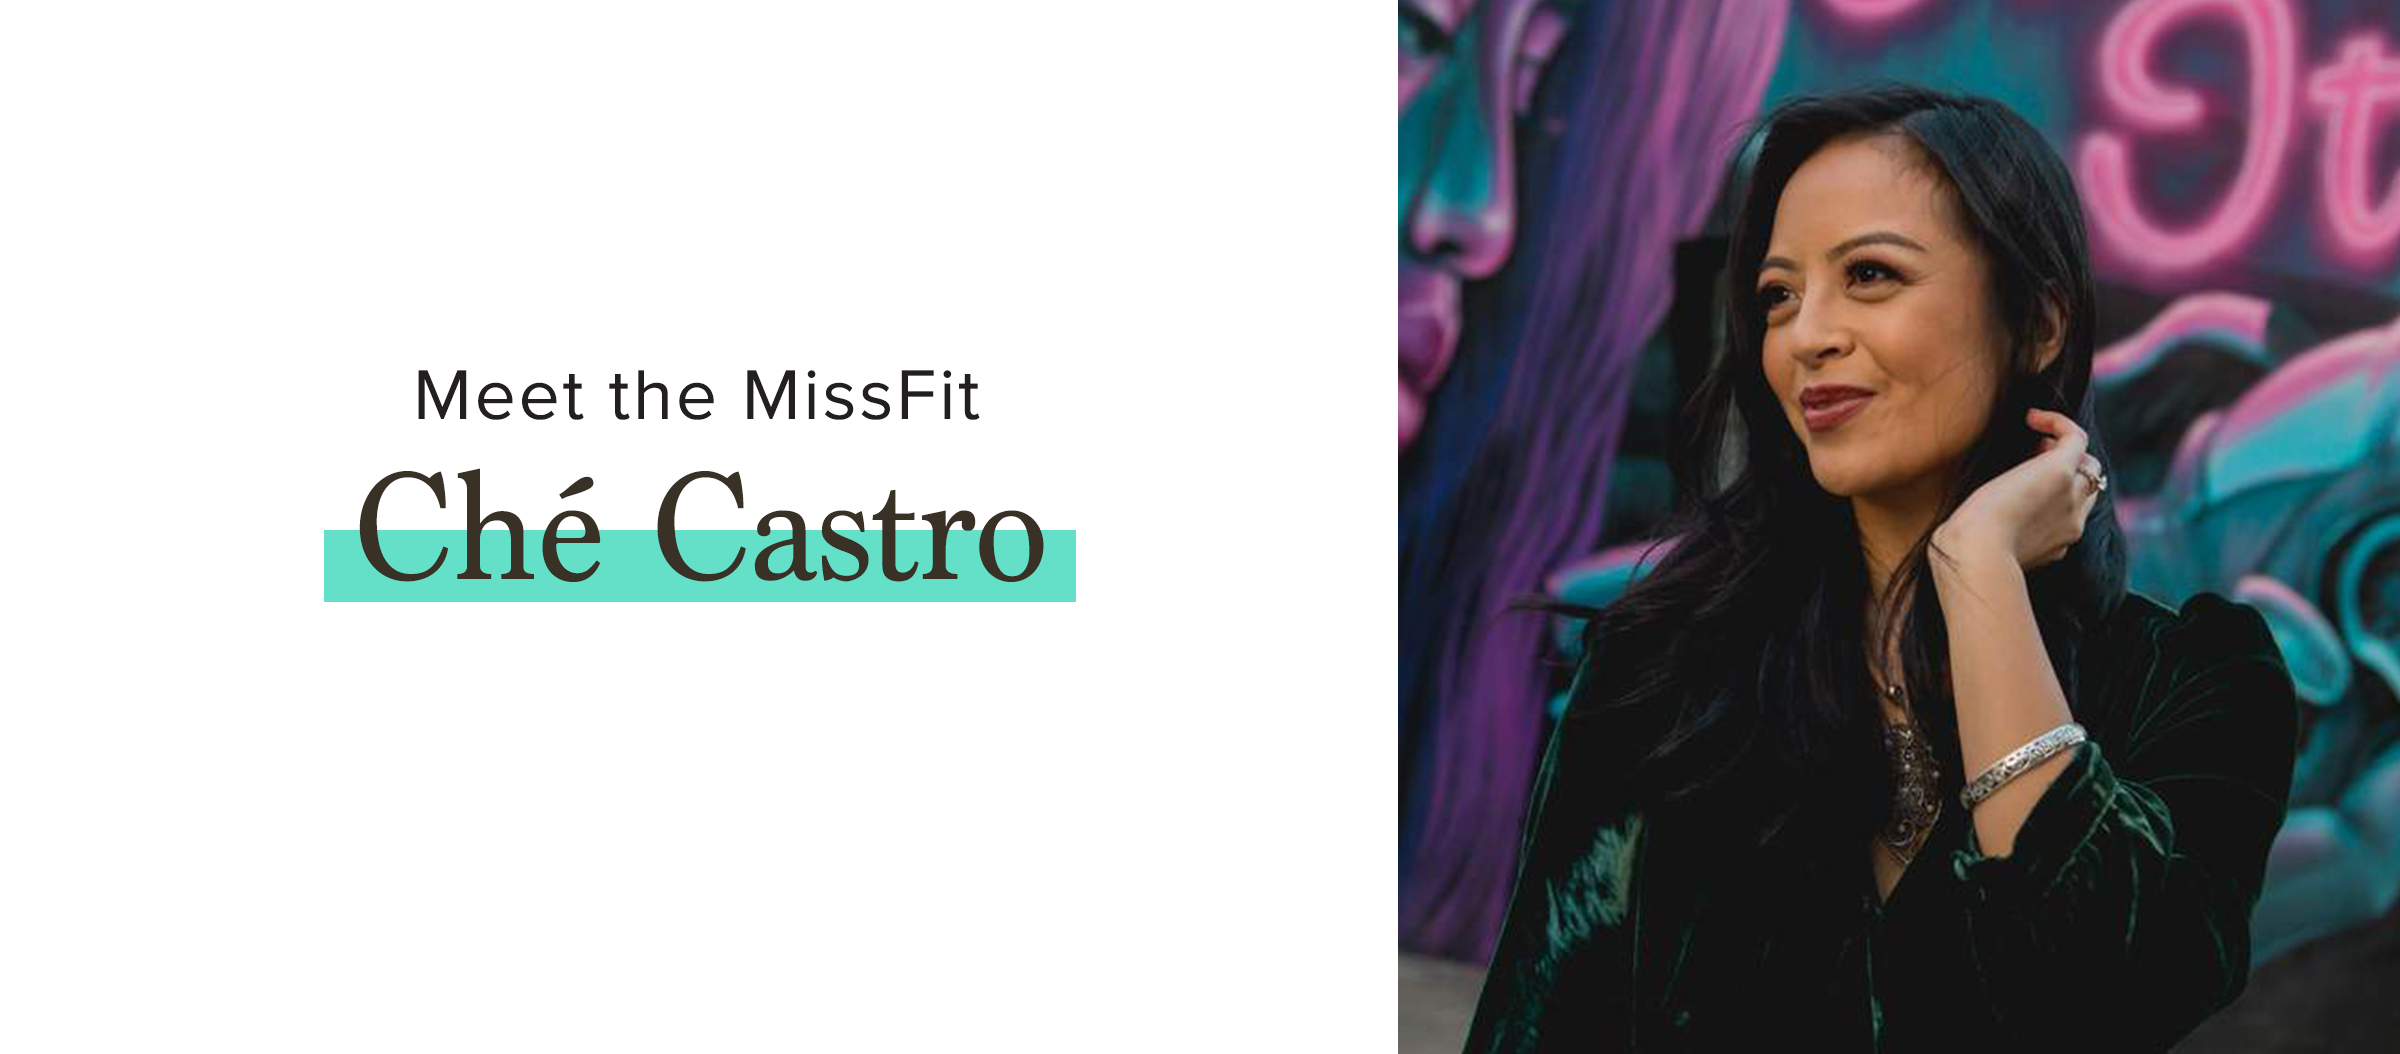 Meet the MissFit, Che Castro